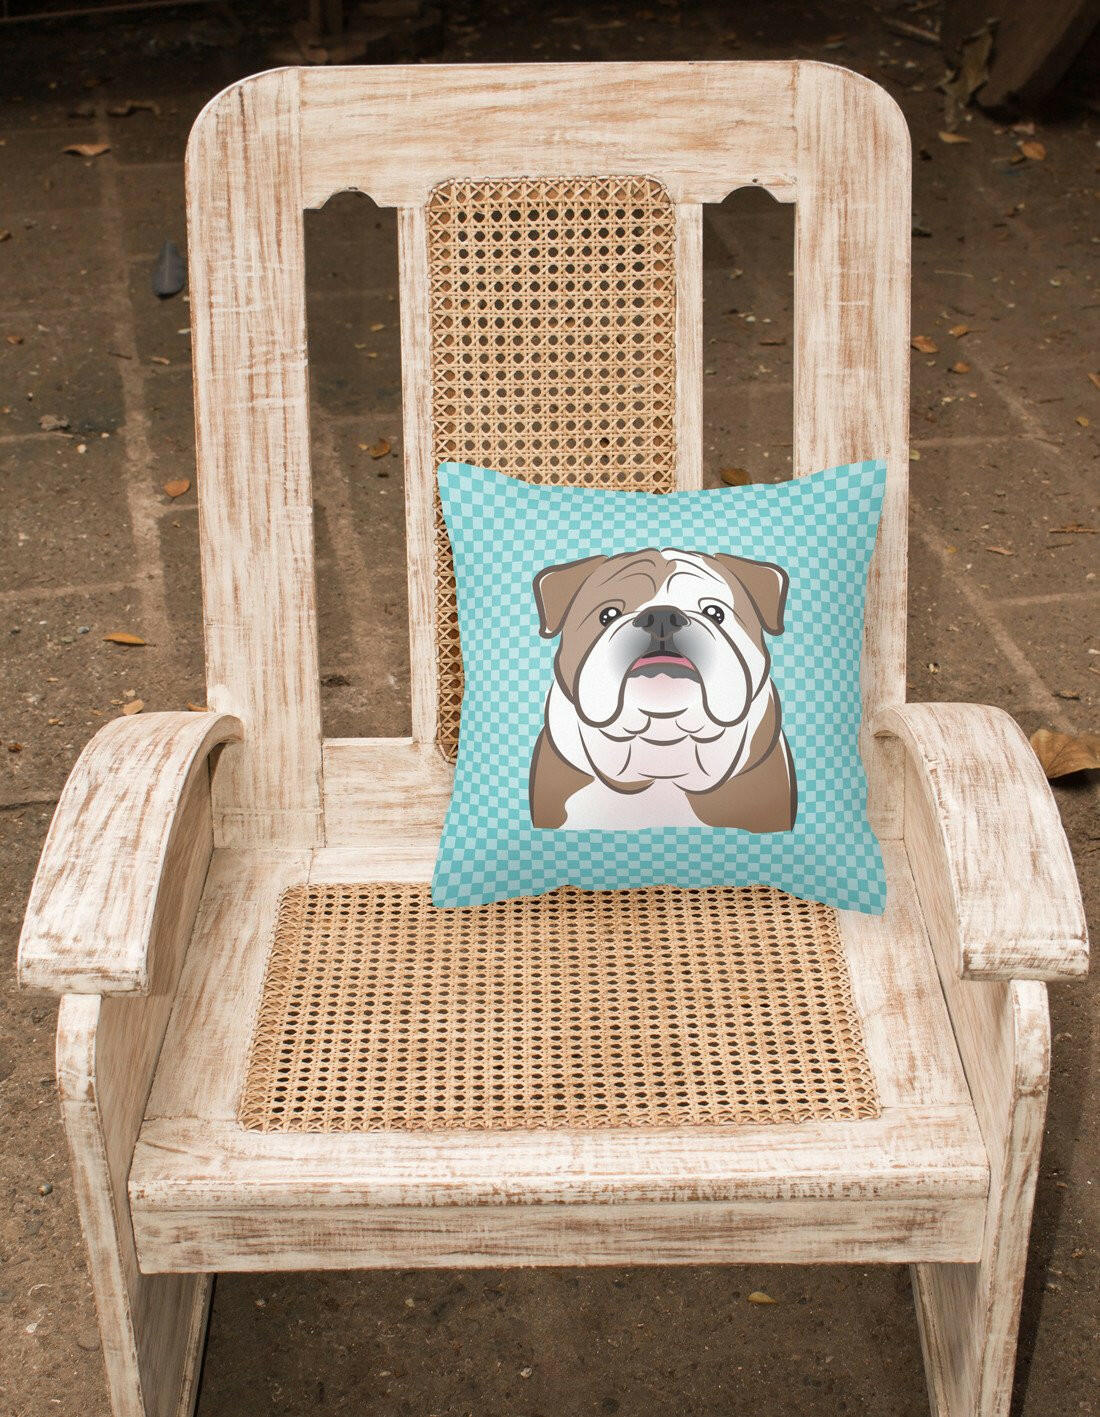 Checkerboard Blue English Bulldog  Canvas Fabric Decorative Pillow BB1157PW1414 - the-store.com